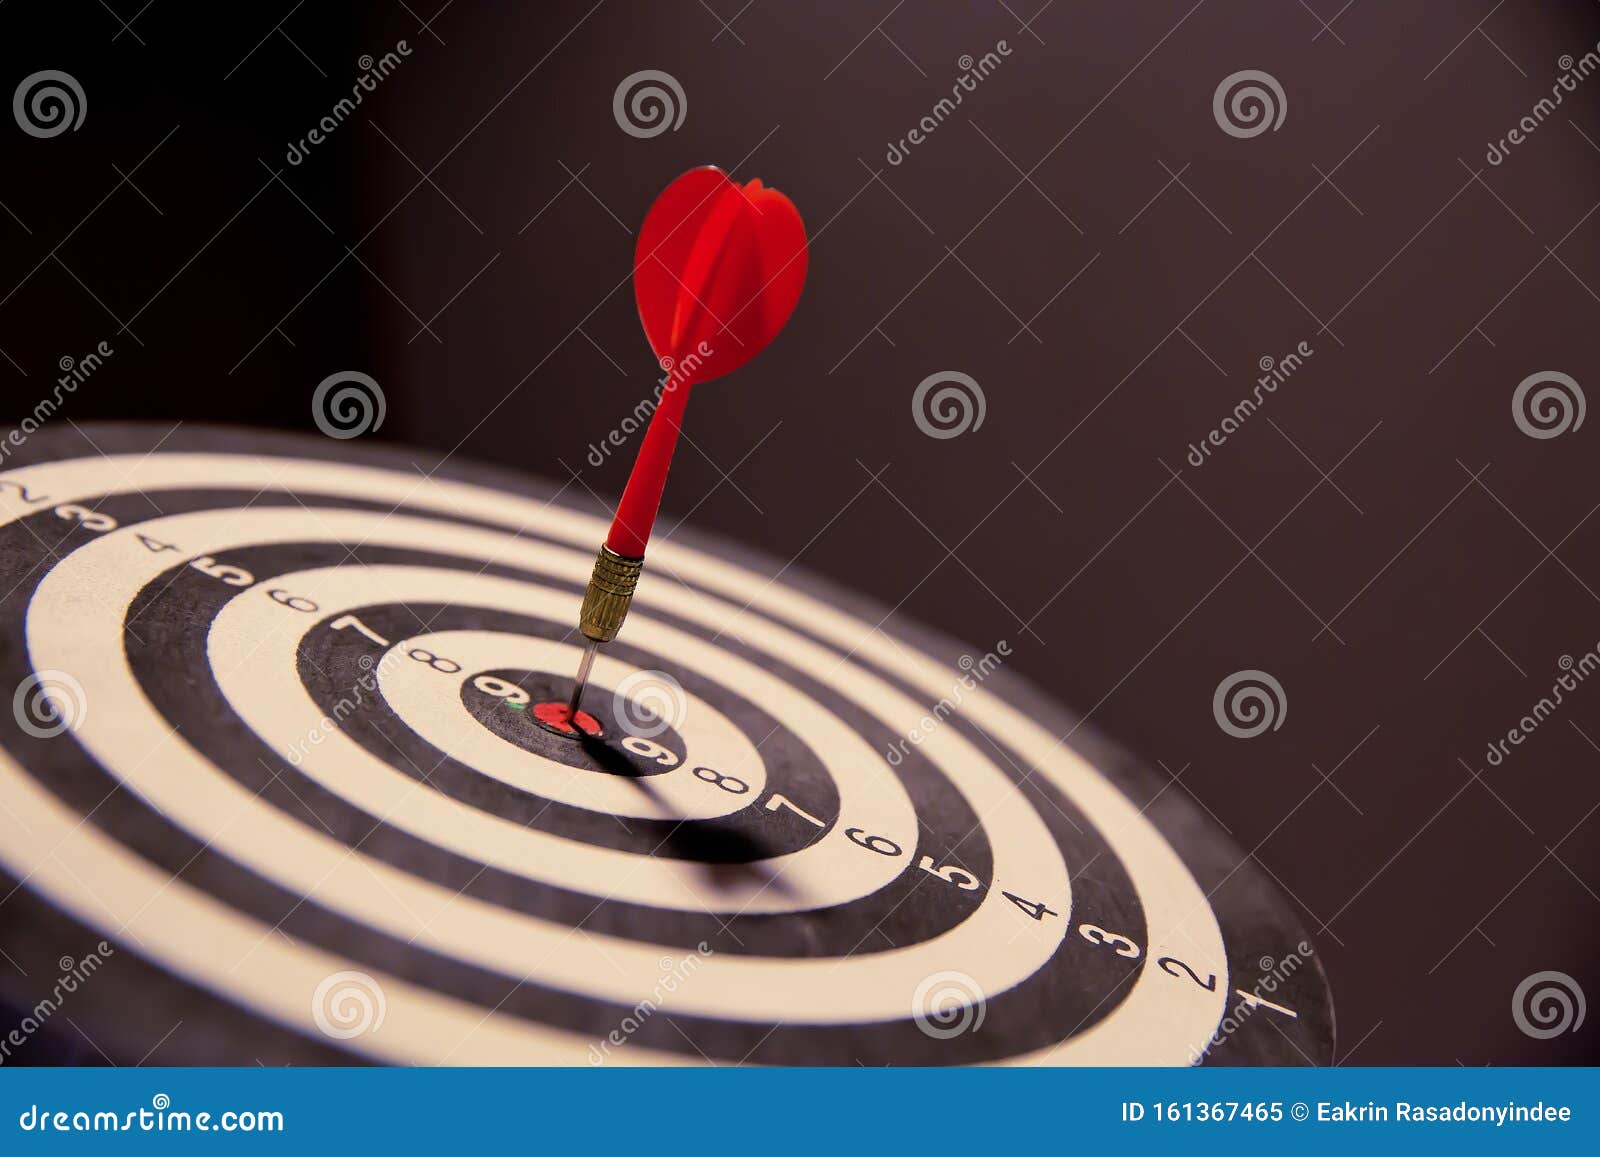 arrow hitting in the target center of bulls-eye